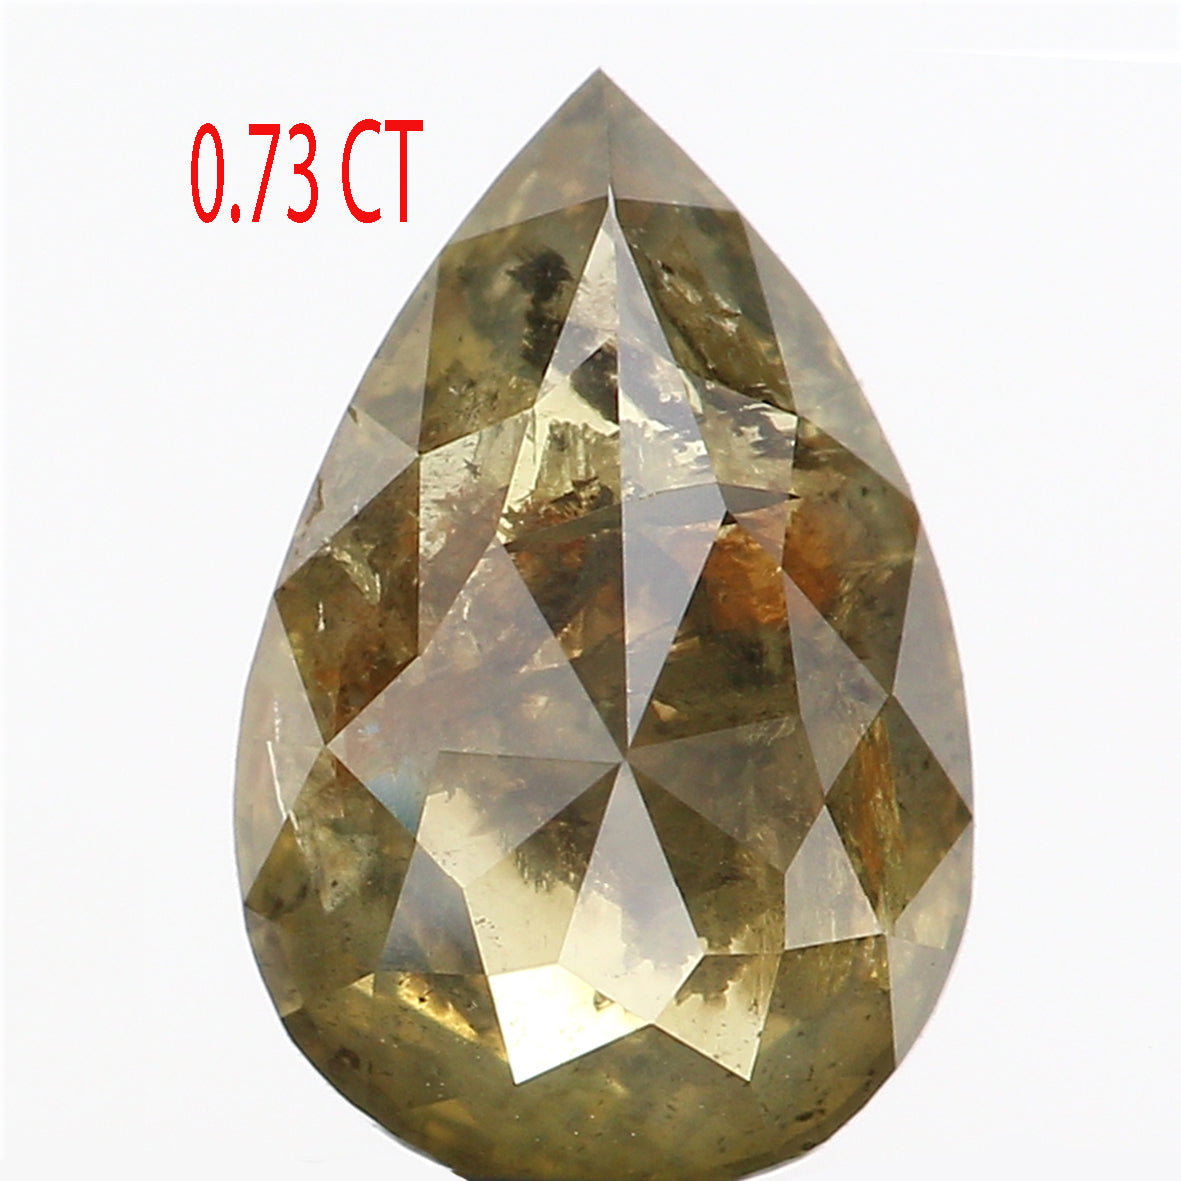 0.73 CT Natural Loose Diamond, Pear Diamond, Green Diamond, Rustic Diamond, Pear Cut Diamond, Fancy Color Diamond L442